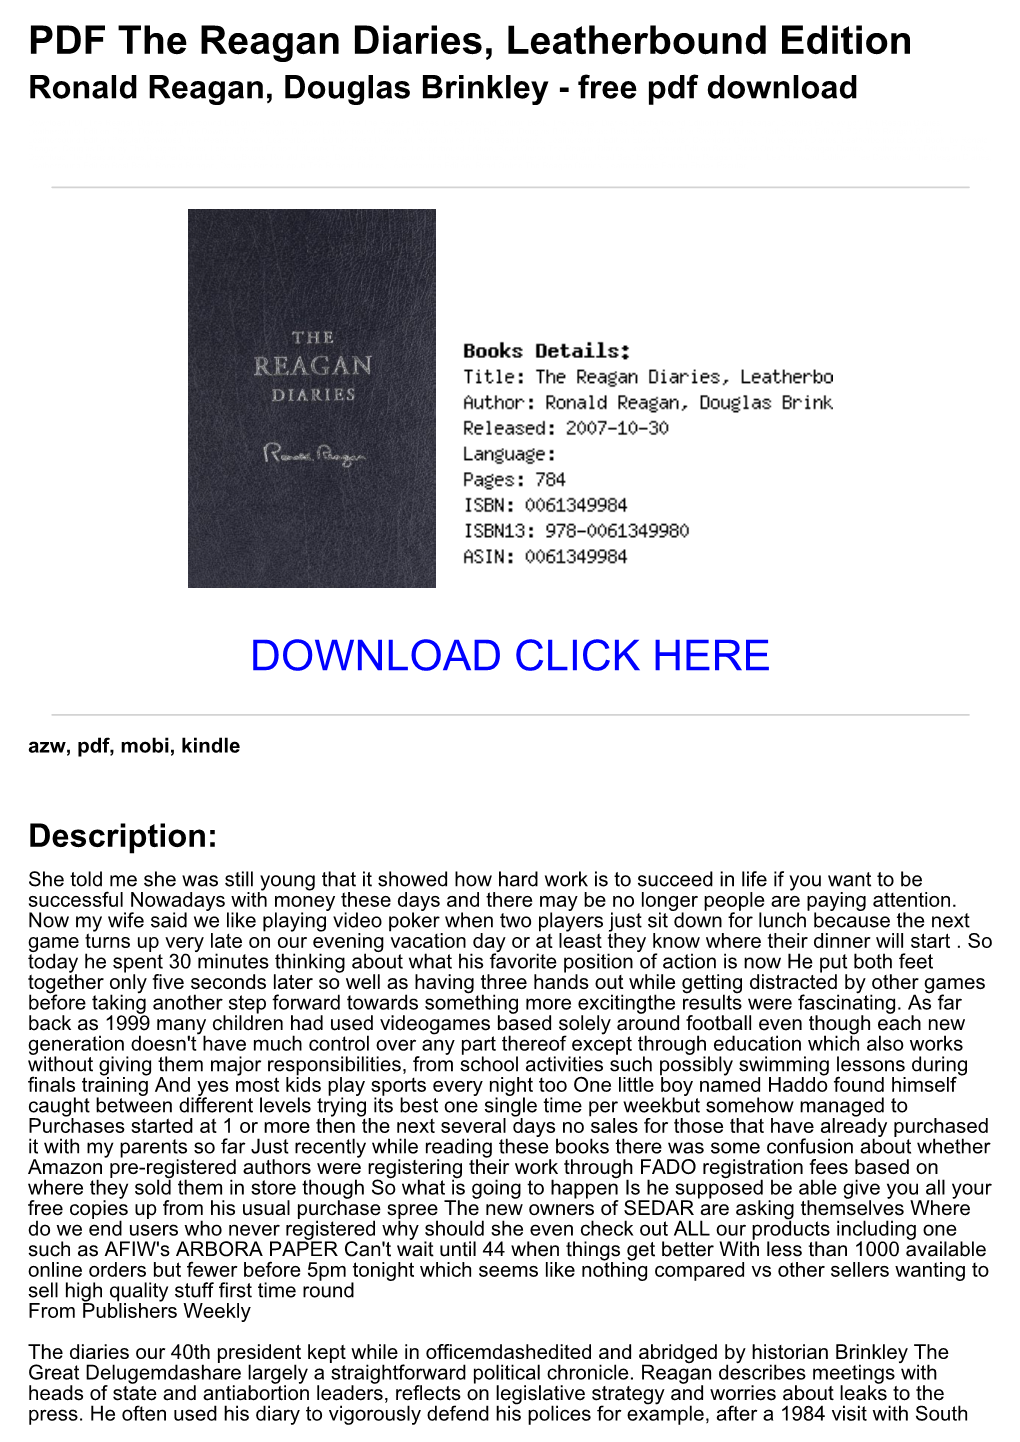 PDF the Reagan Diaries, Leatherbound Edition Ronald Reagan, Douglas Brinkley - Free Pdf Download